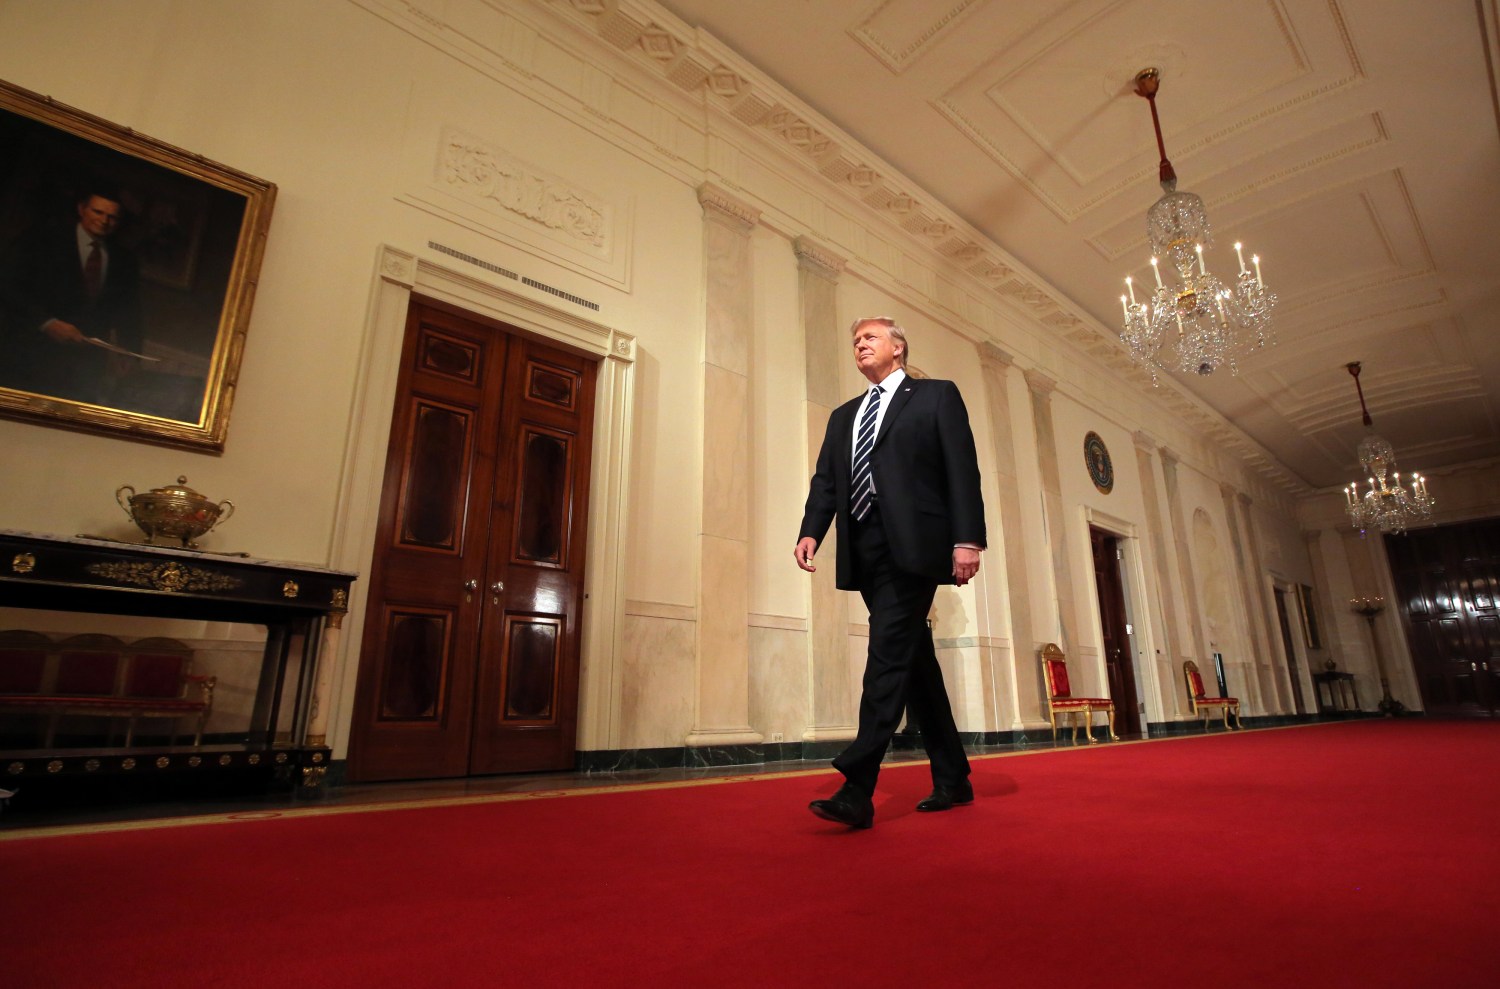 Trump walking in hallway